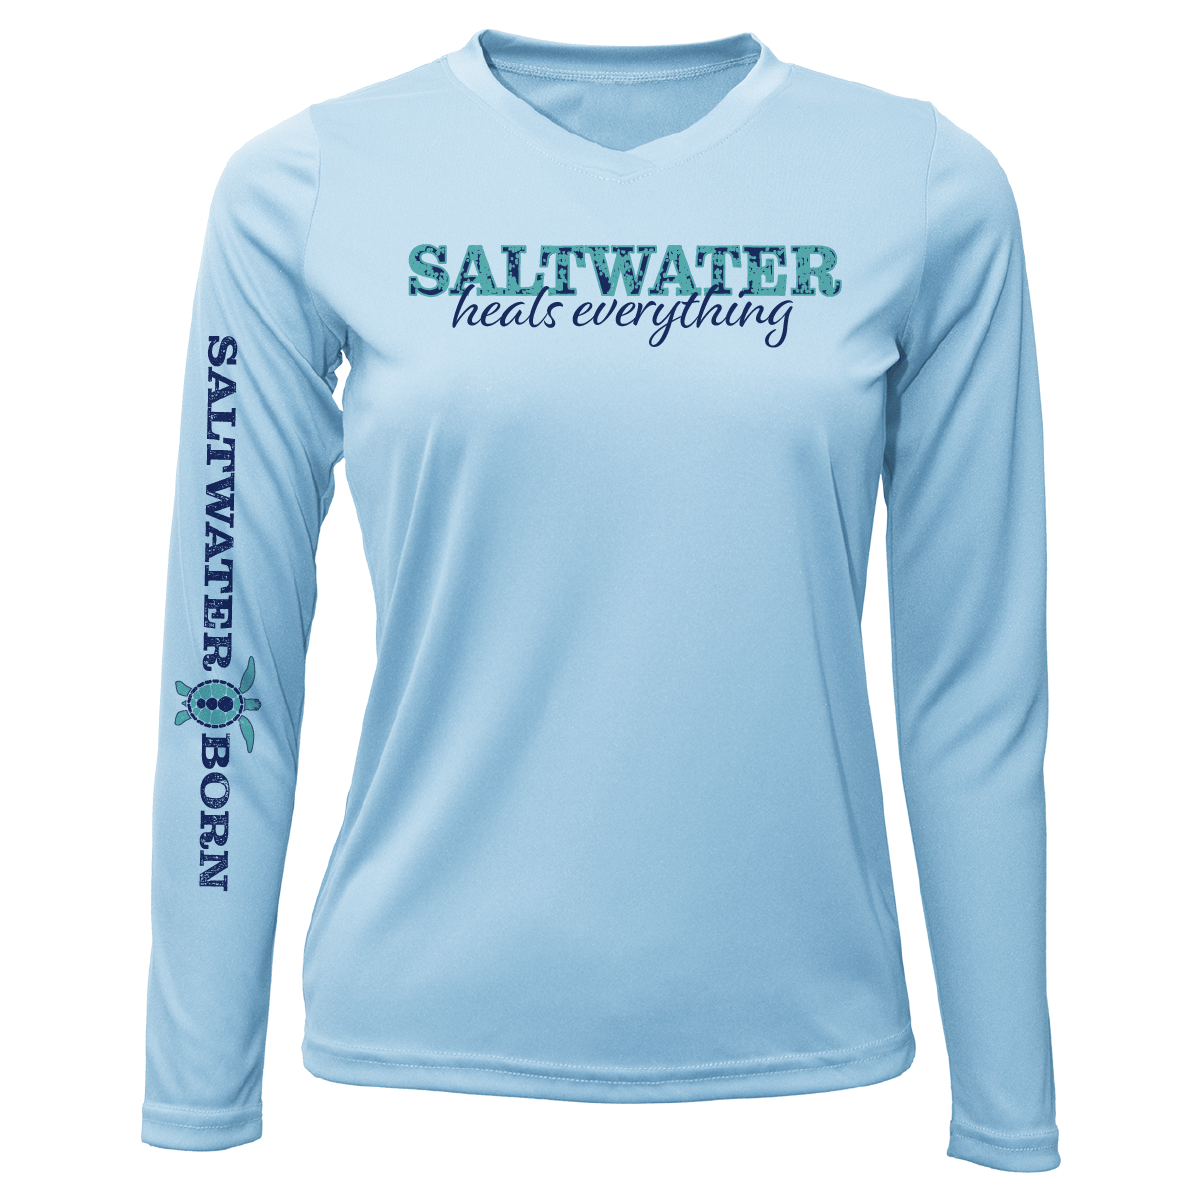 Saltwater Born Shirts S / ICE BLUE Siesta Key "Saltwater Heals Everything" Long Sleeve UPF 50+ Dry-Fit Shirt